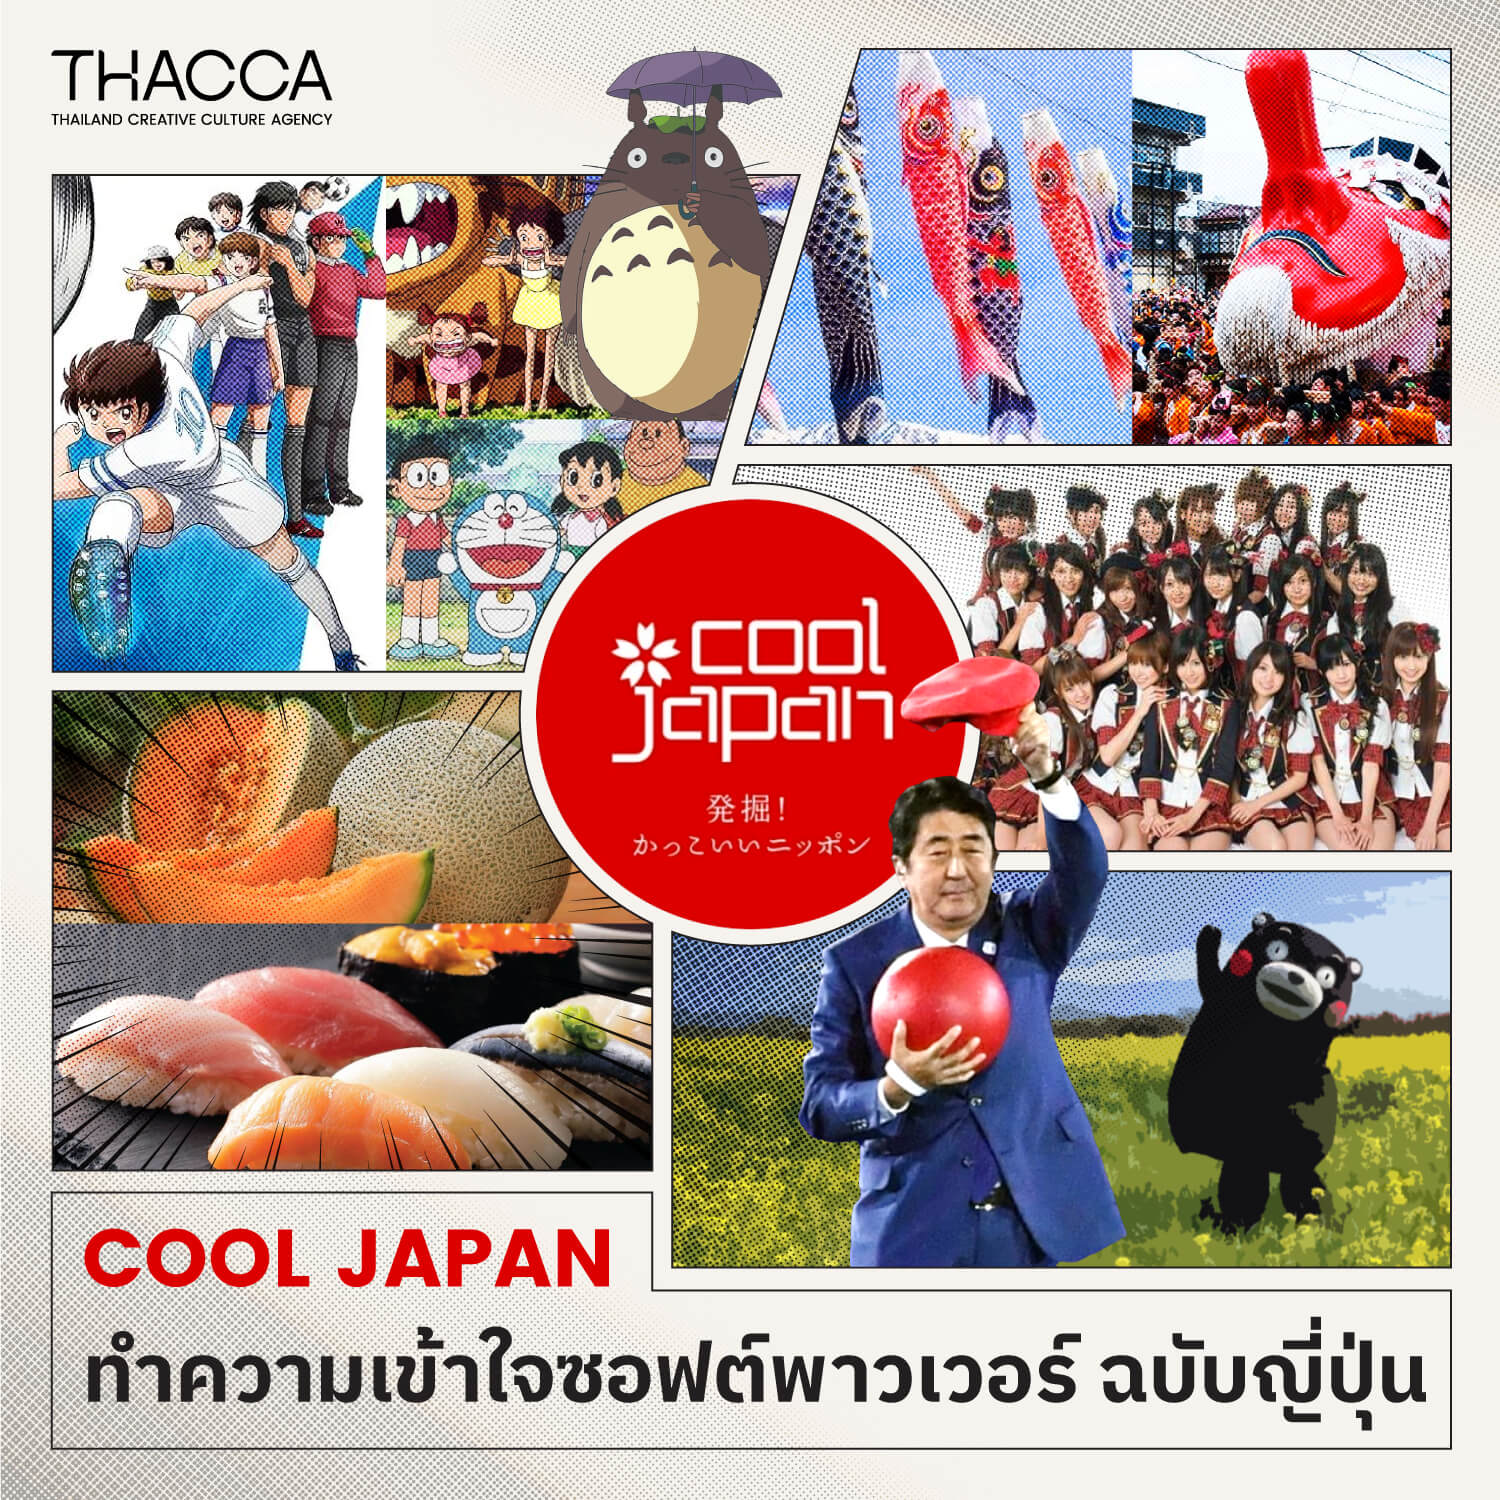 "Cool Japan" ทำความเข้าใจซอฟต์พาวเวอร์ฉบับญี่ปุ่น